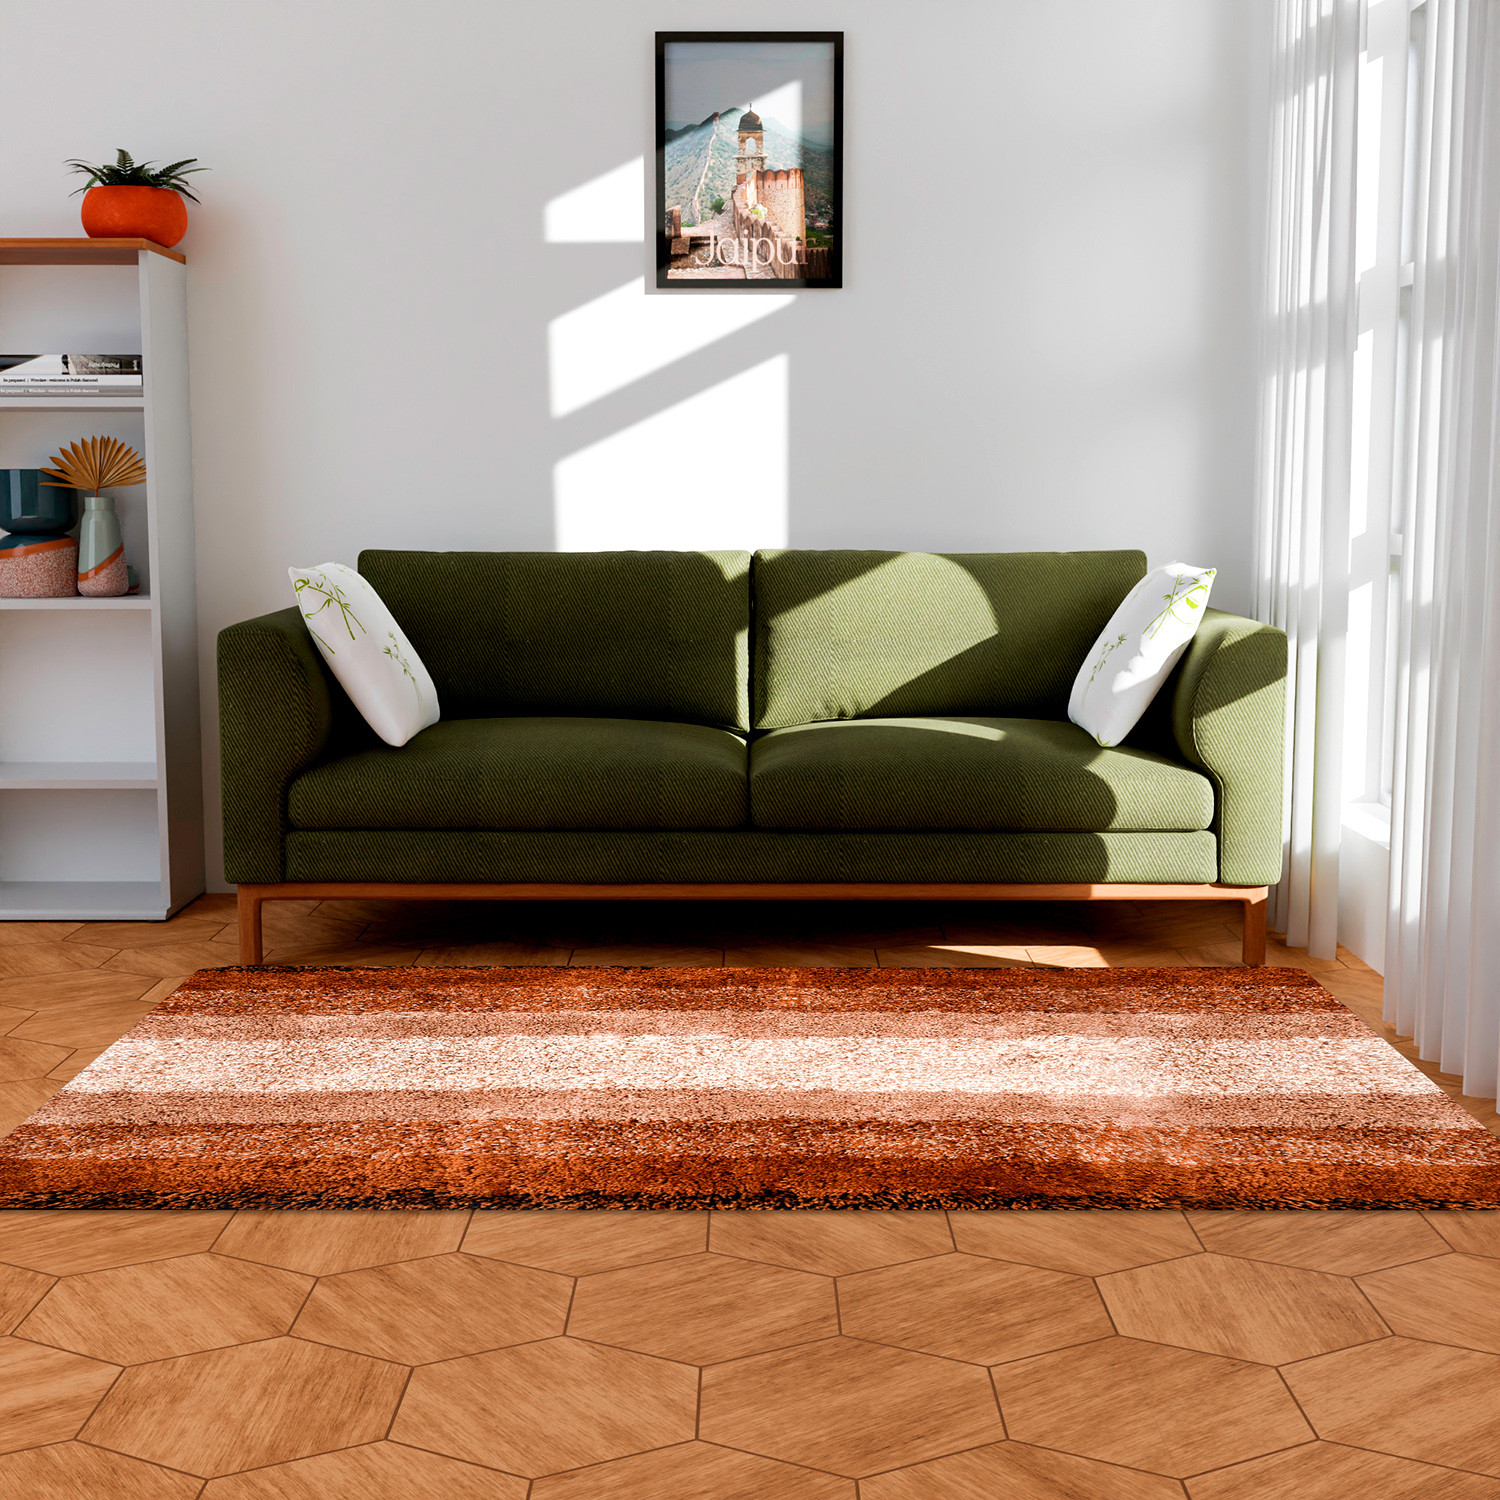 Kuber Industries Carpet | Shaggy Carpet for Living Room | Fluffy Door Mat | Golden Patta Home Decor Carpet & Door Mat Combo | Floor Carpet Rug & Door Mat Set | Set of 2 | Cream